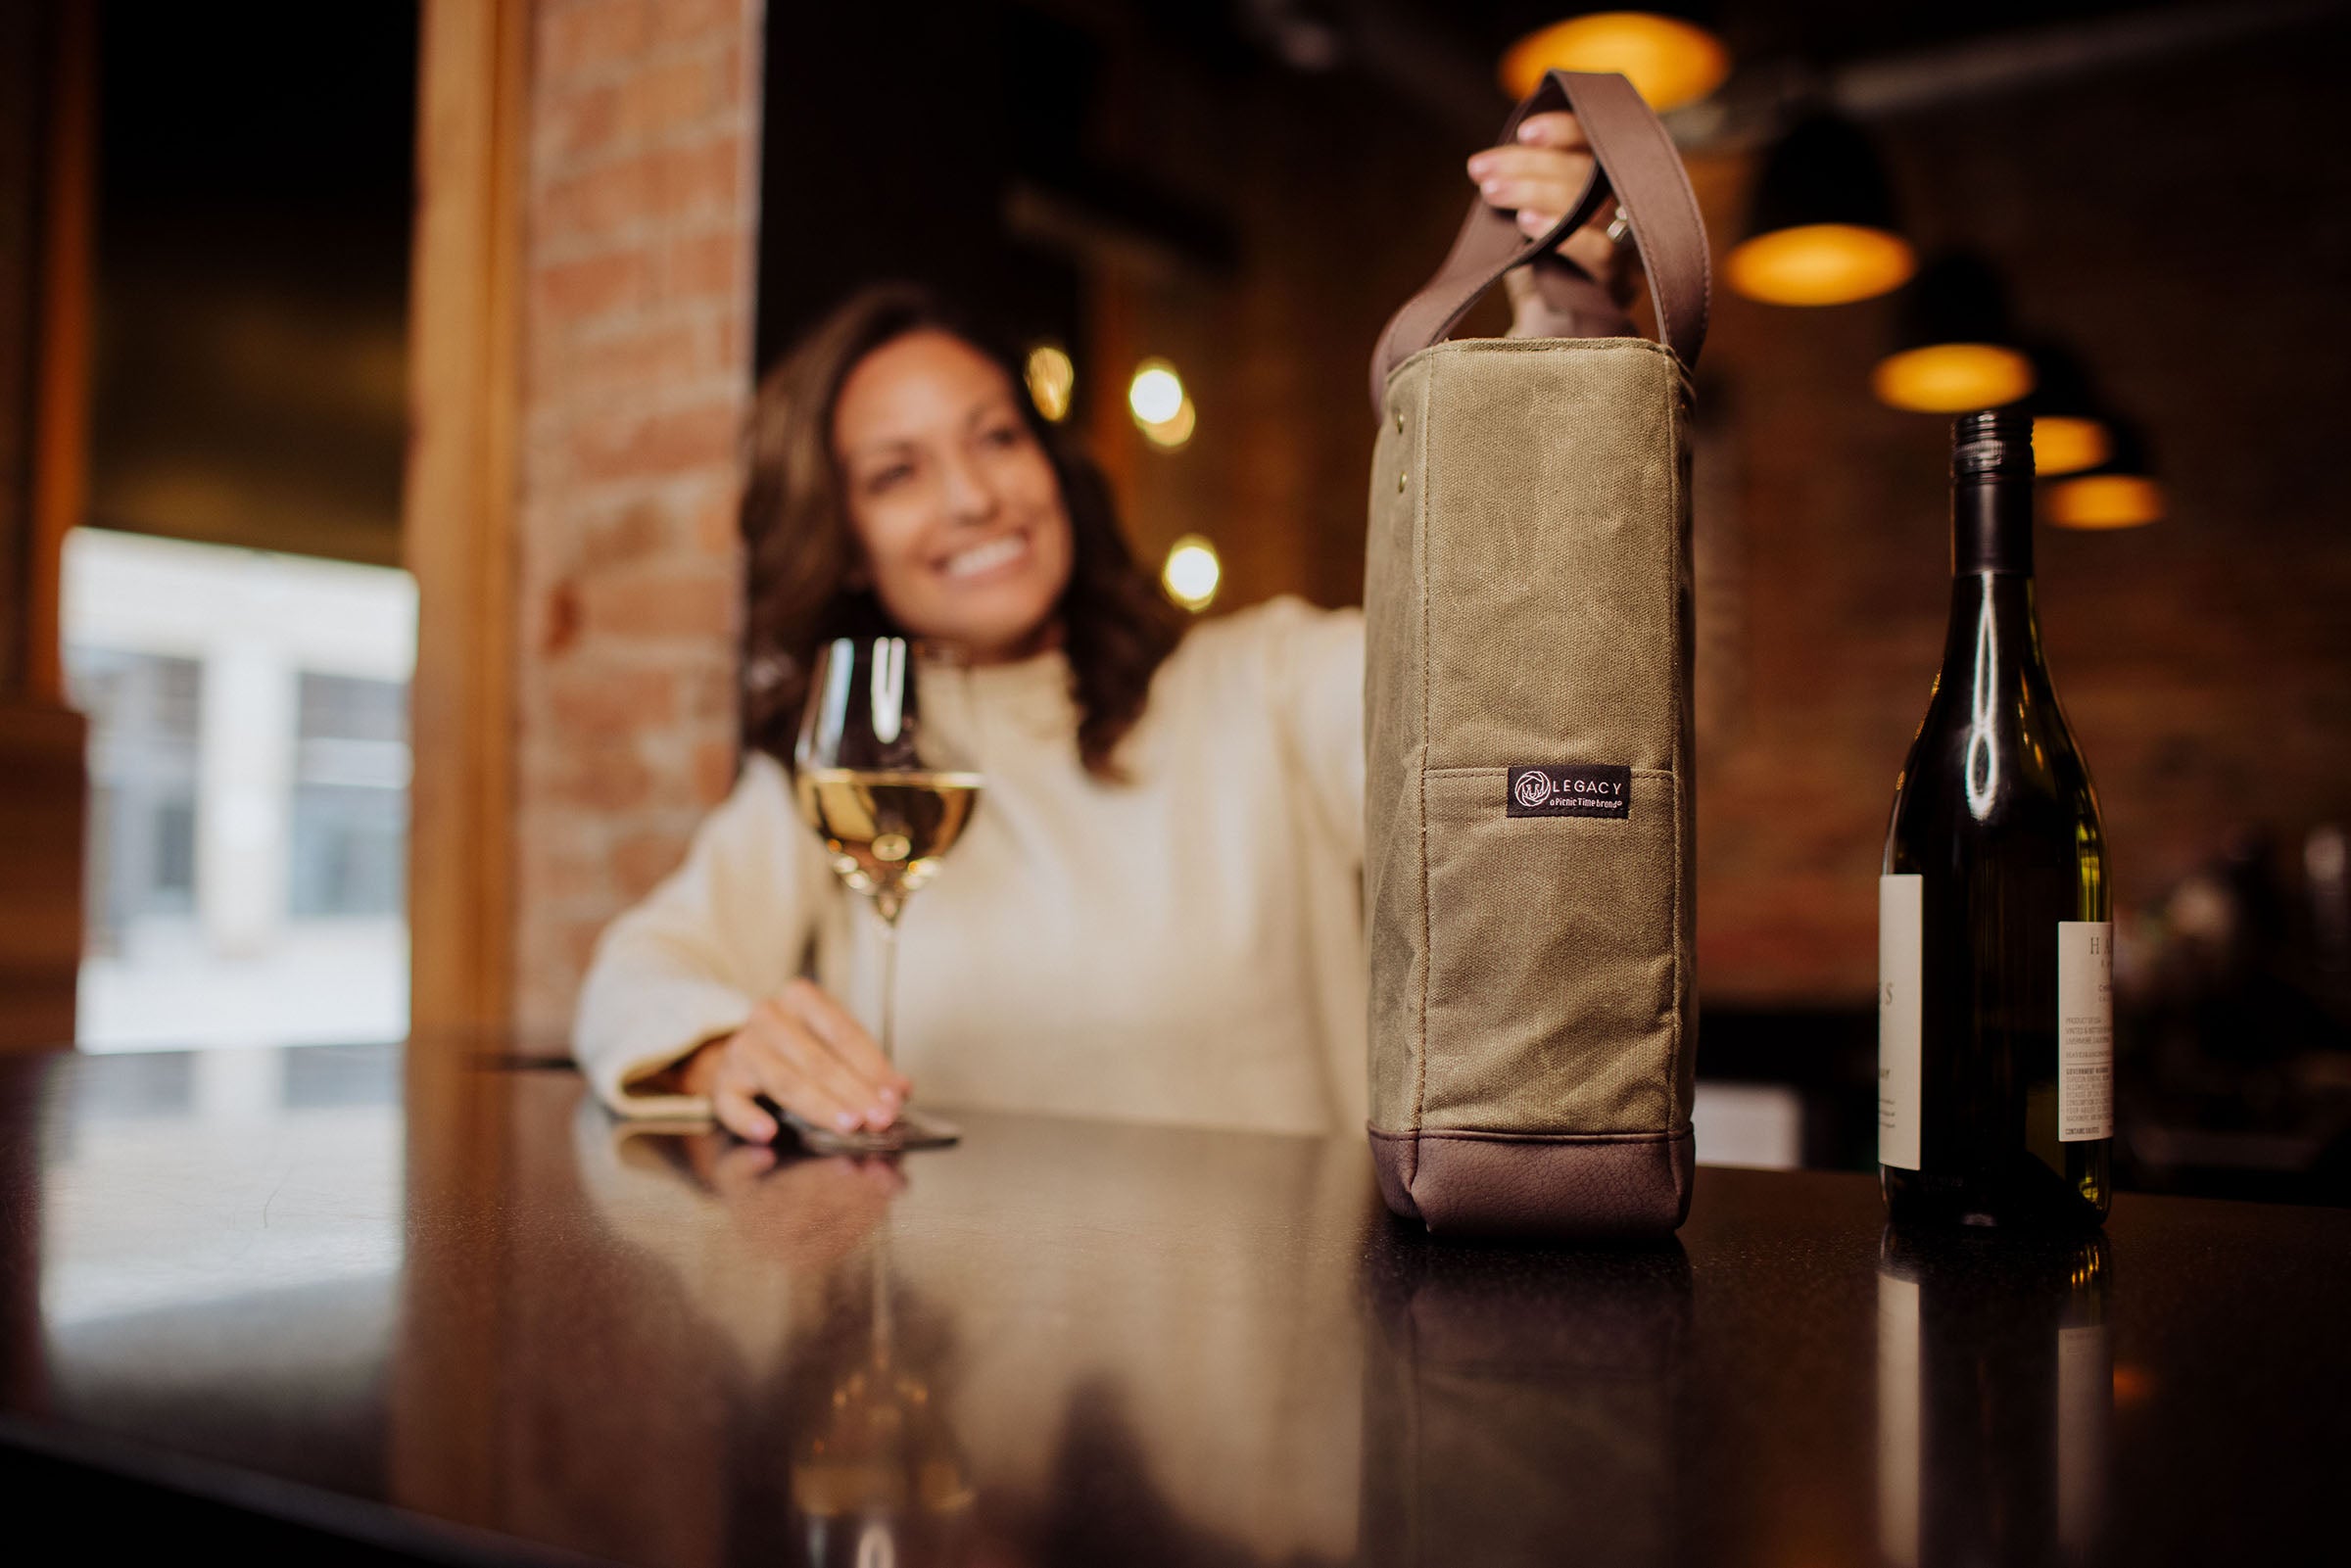 Georgia Tech Yellow Jackets - 2 Bottle Insulated Wine Cooler Bag